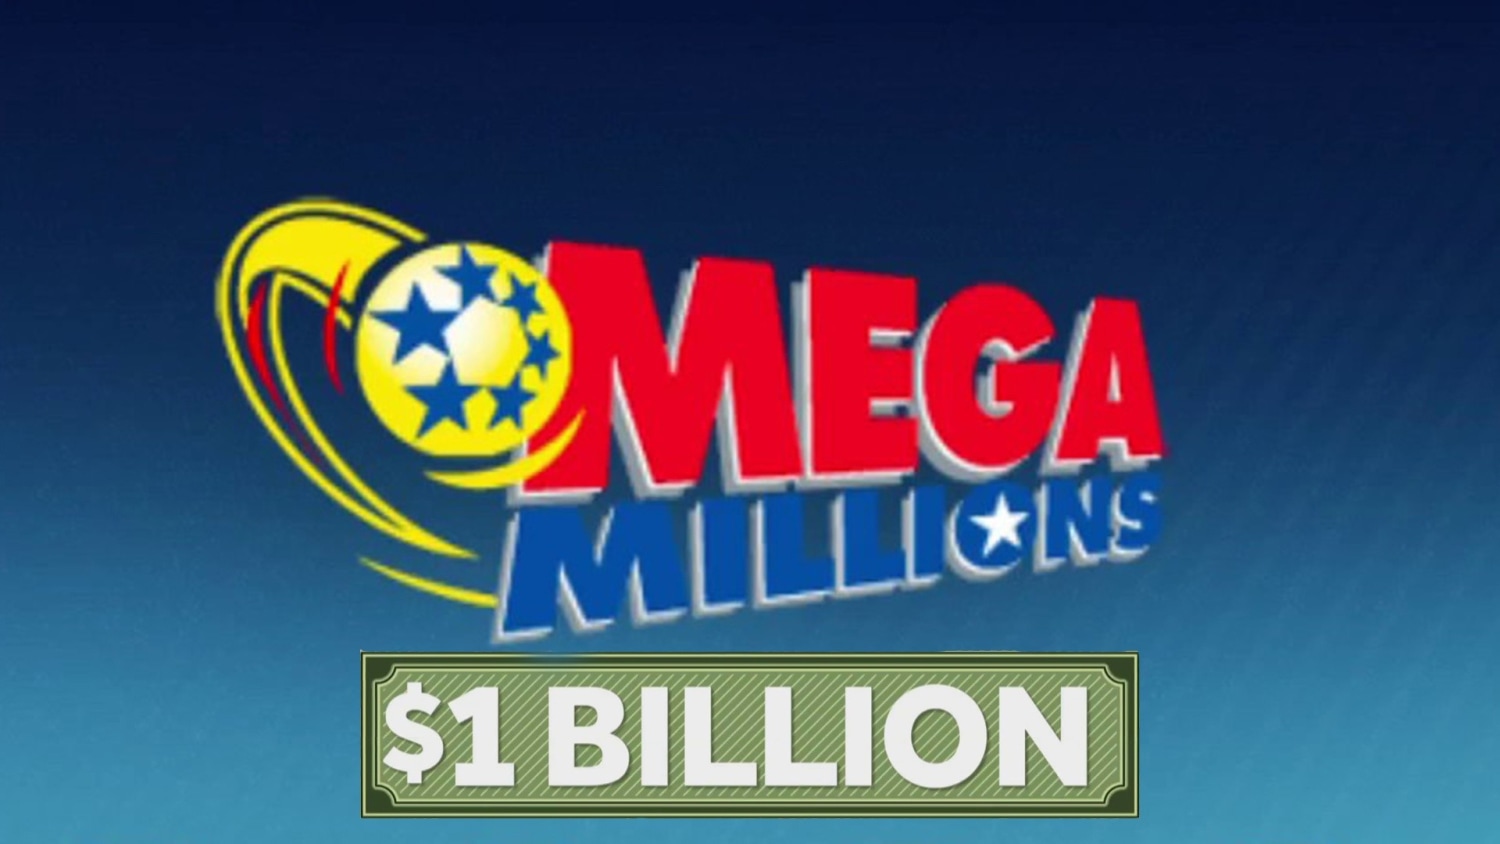 Mega Millions jackpot passes $1 billion after no one draws winning numbers  : NPR